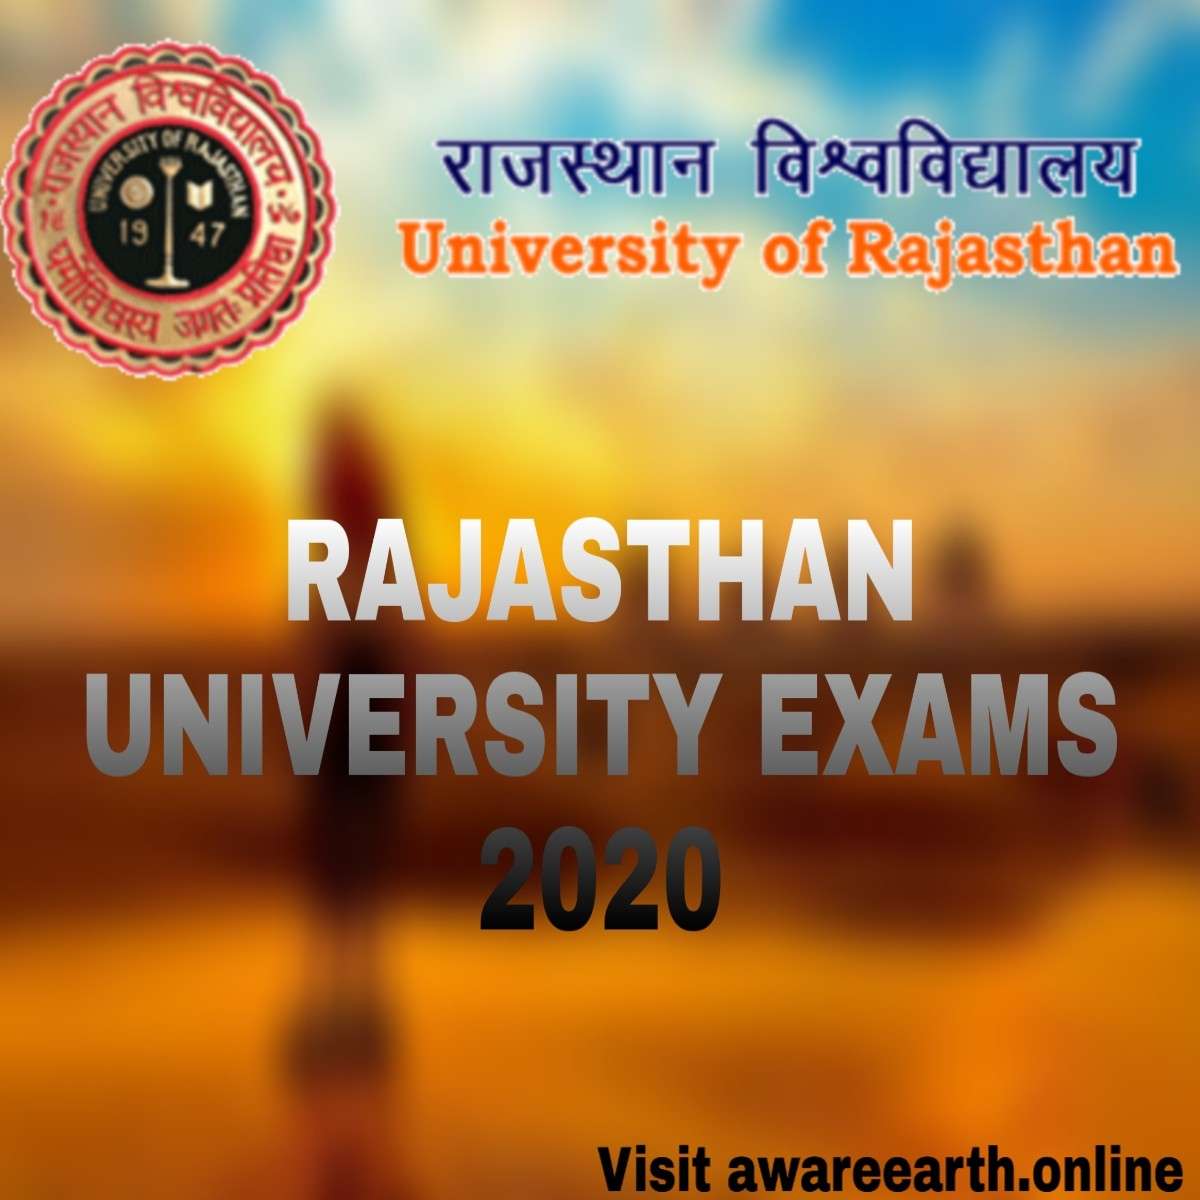 Rajasthan University Exams